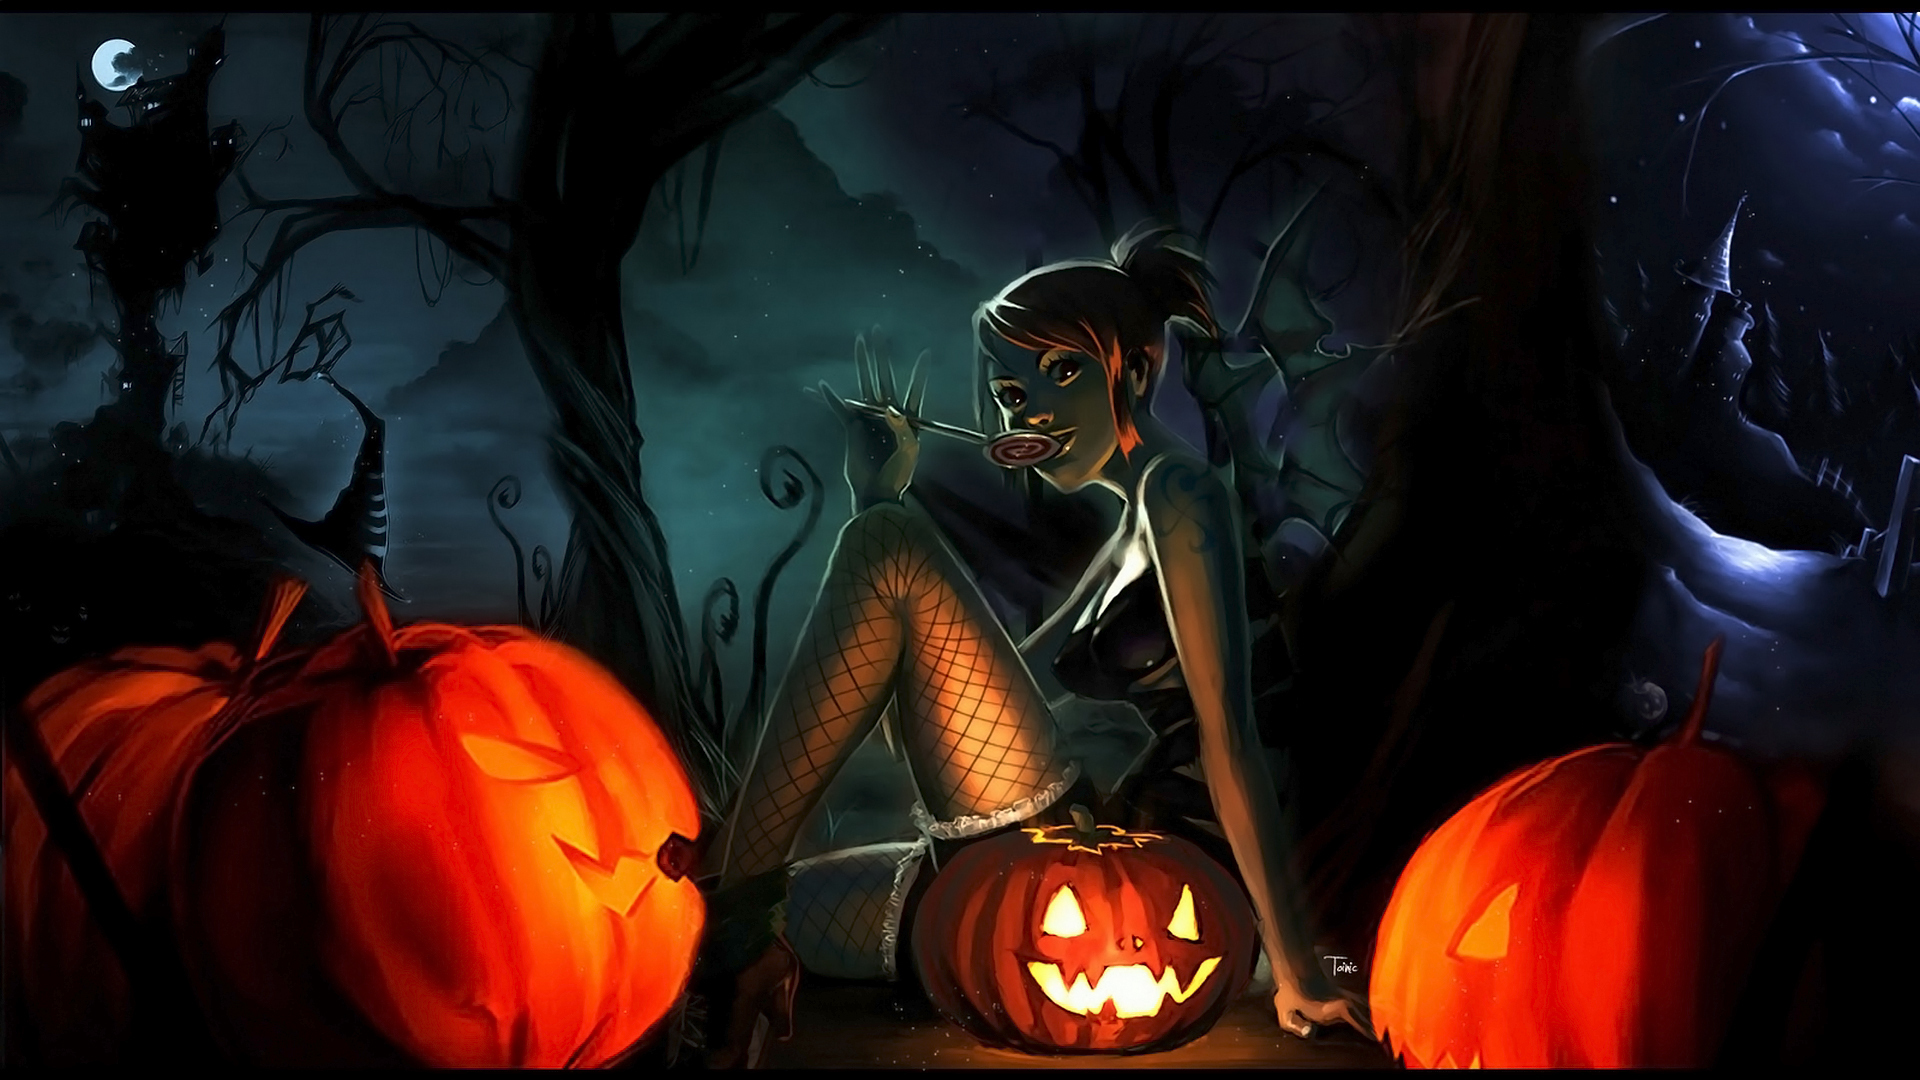 http://www.zastavki.com/pictures/originals/2014/Holidays___Halloween_The_girl_with_candy_088332_.jpg